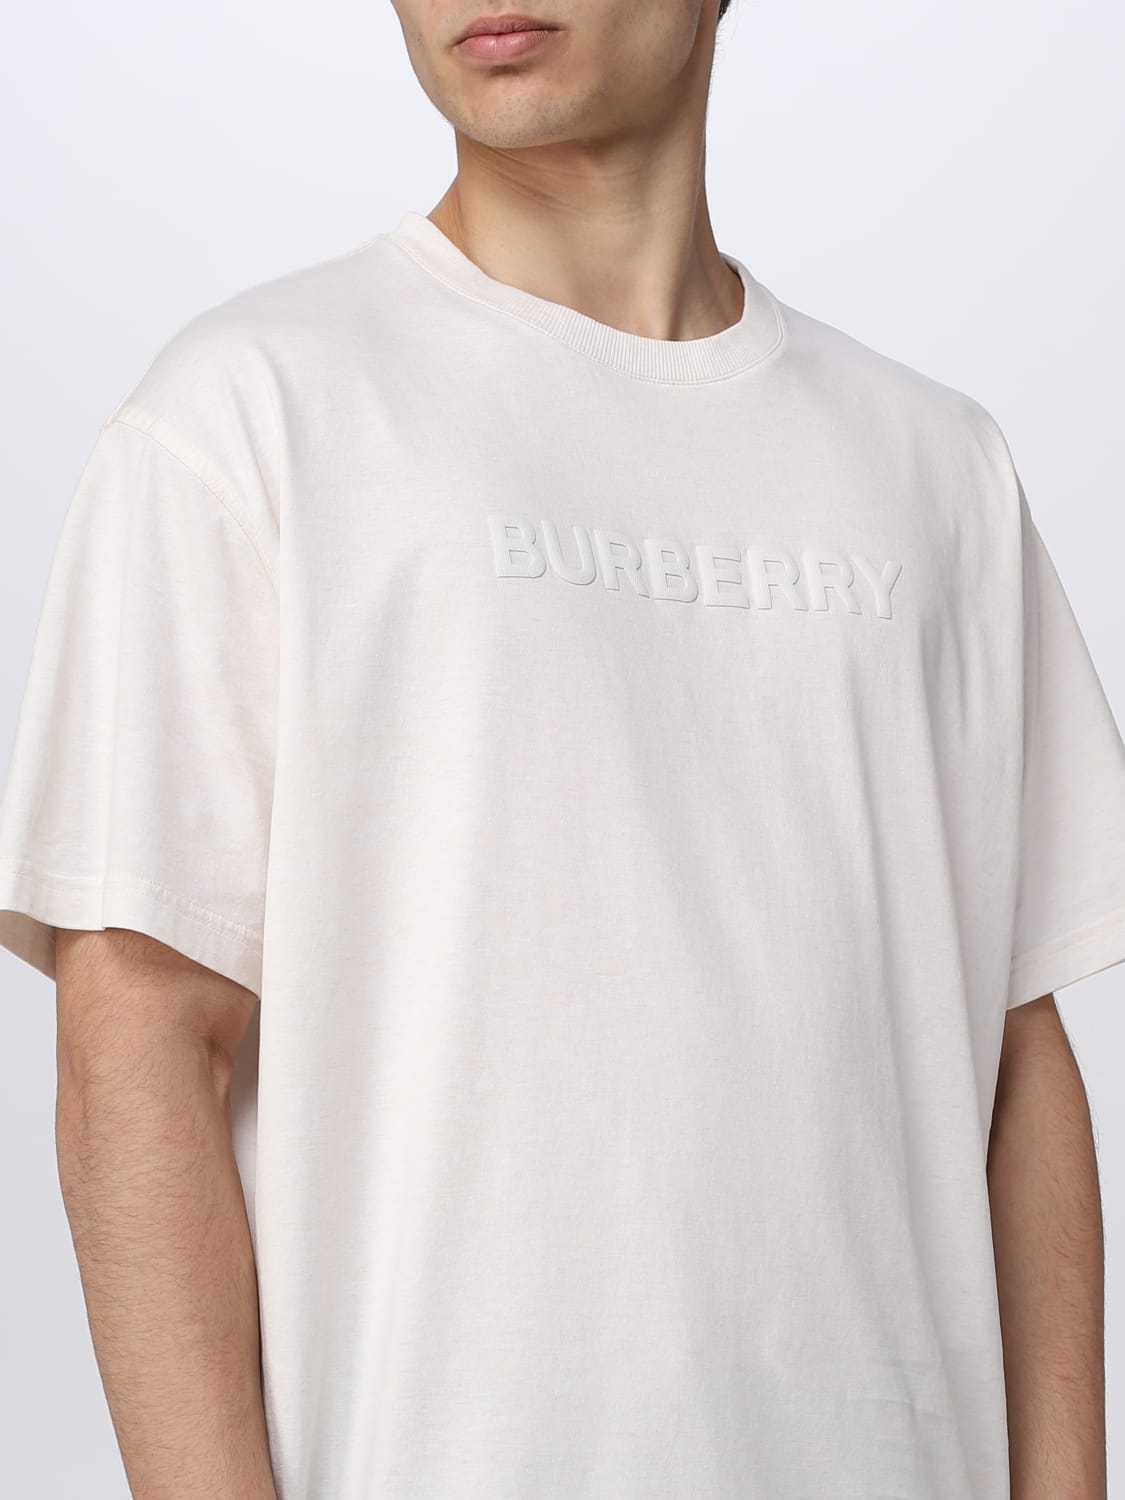 Burberryアウトレット：Tシャツ メンズ - グレー | GIGLIO.COM